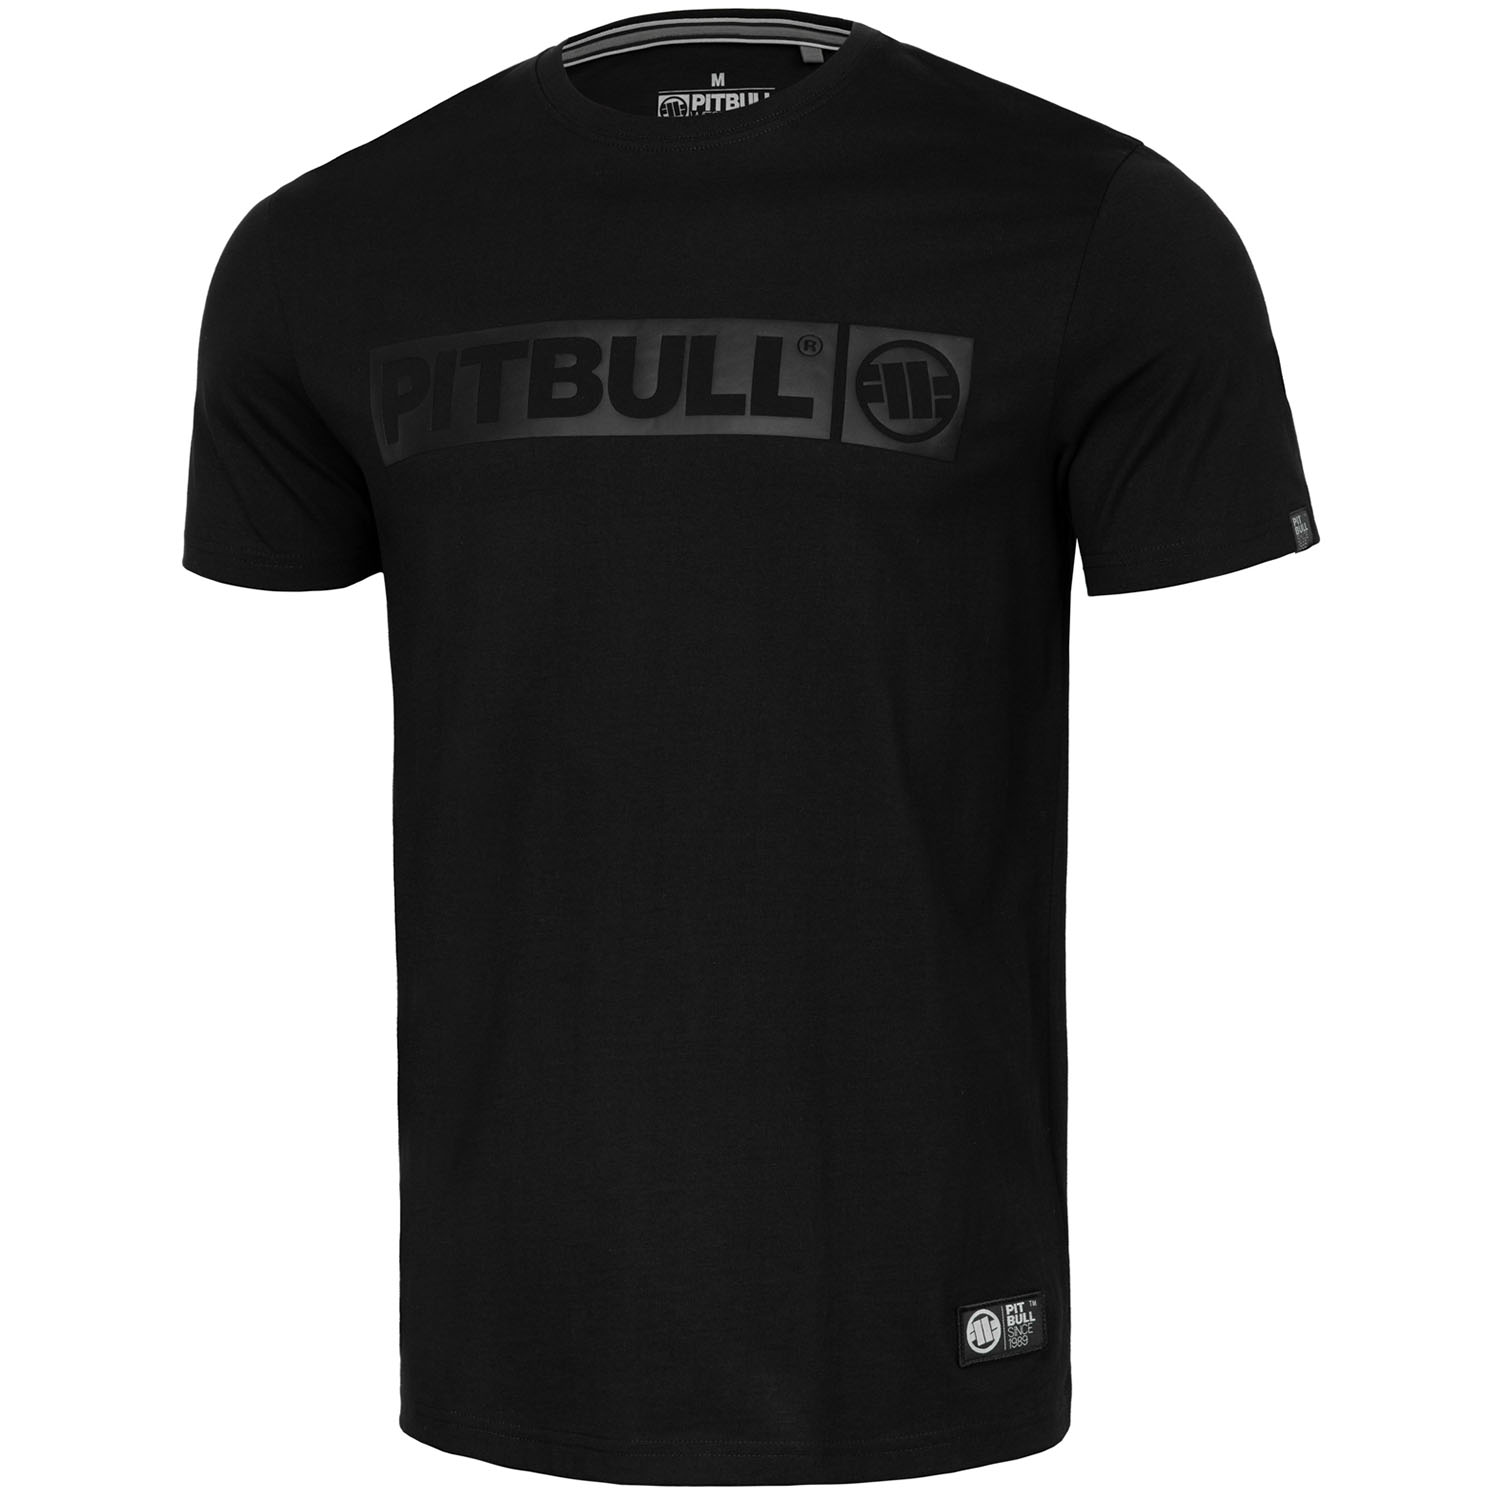 Pit Bull West Coast T-Shirt, Hilltop, schwarz-schwarz